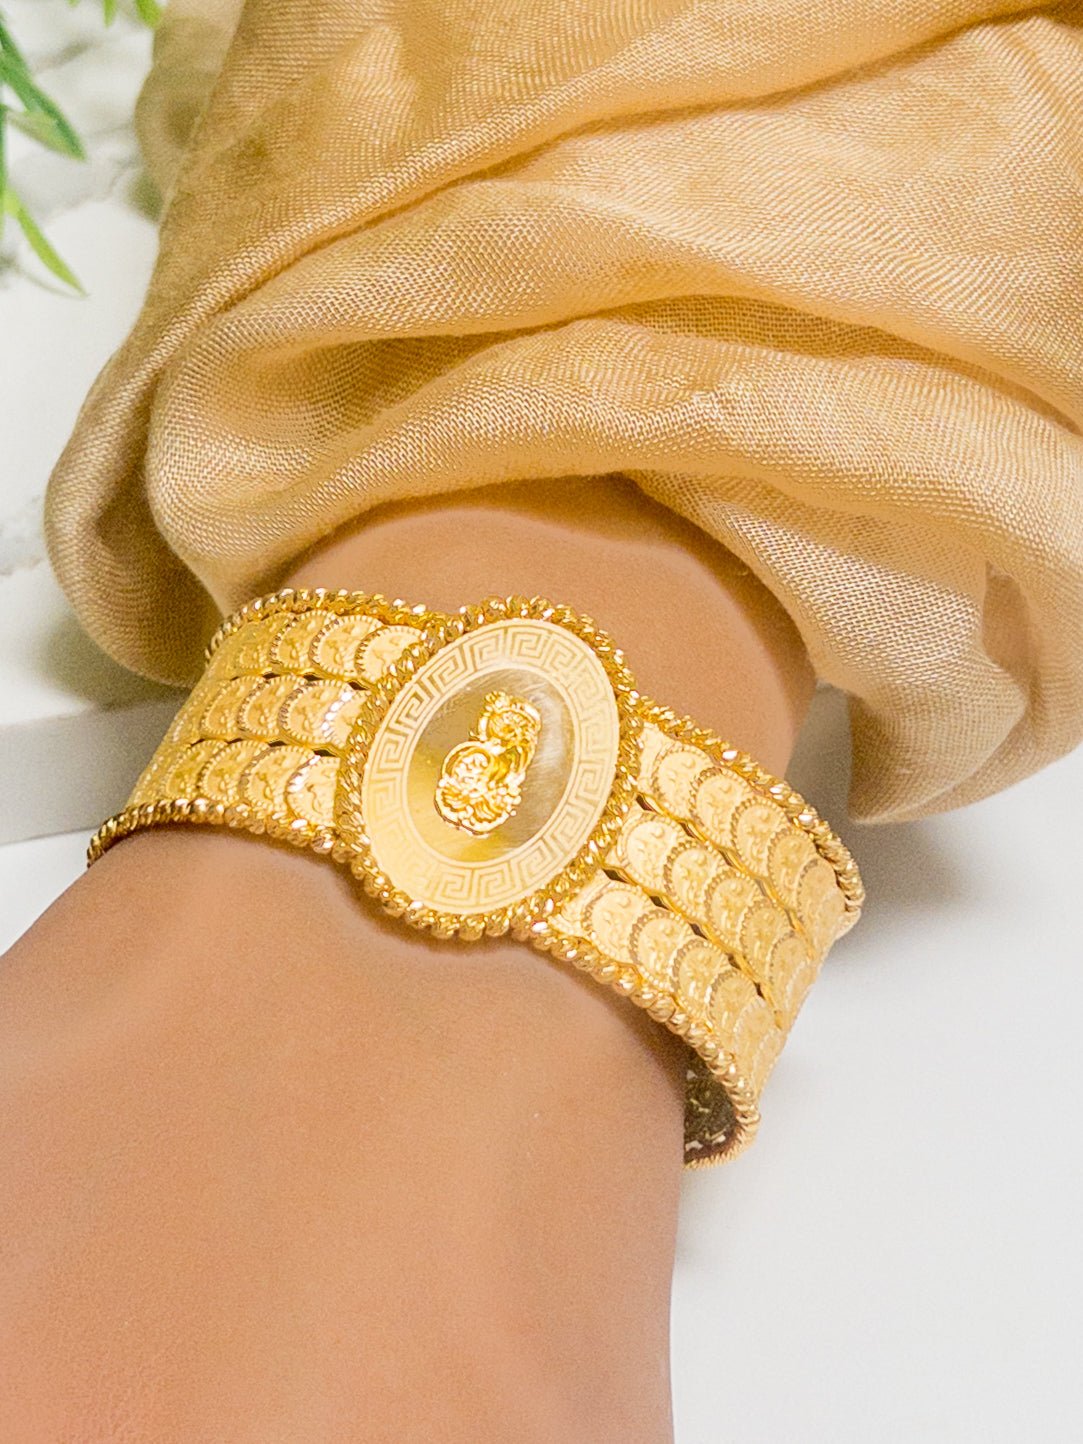 21k Gold Bangles Set - Cleopatra Jewelers